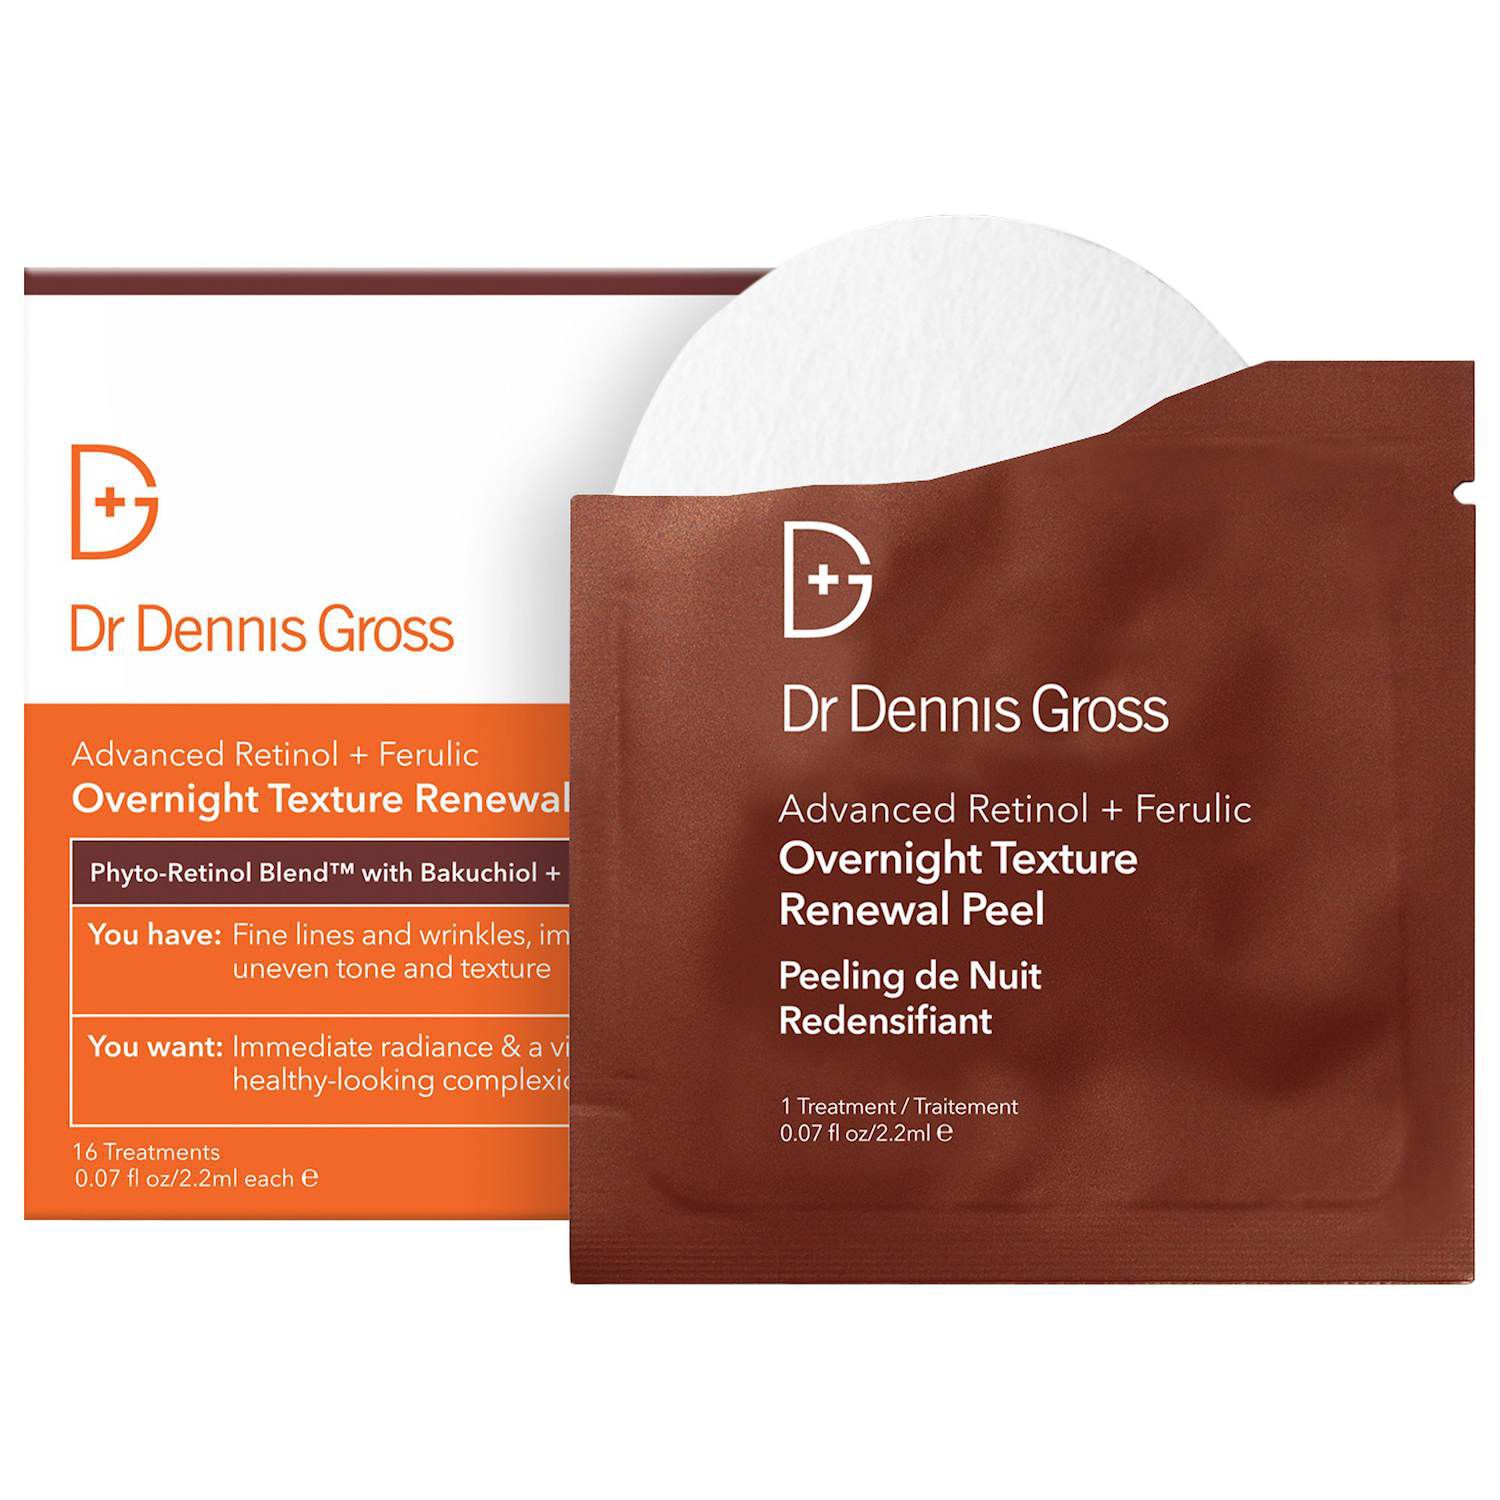 Image for Dr. Dennis Gross Skincare Advanced Retinol + Ferulic Overnight Texture Renewal Peel at Kohl's.